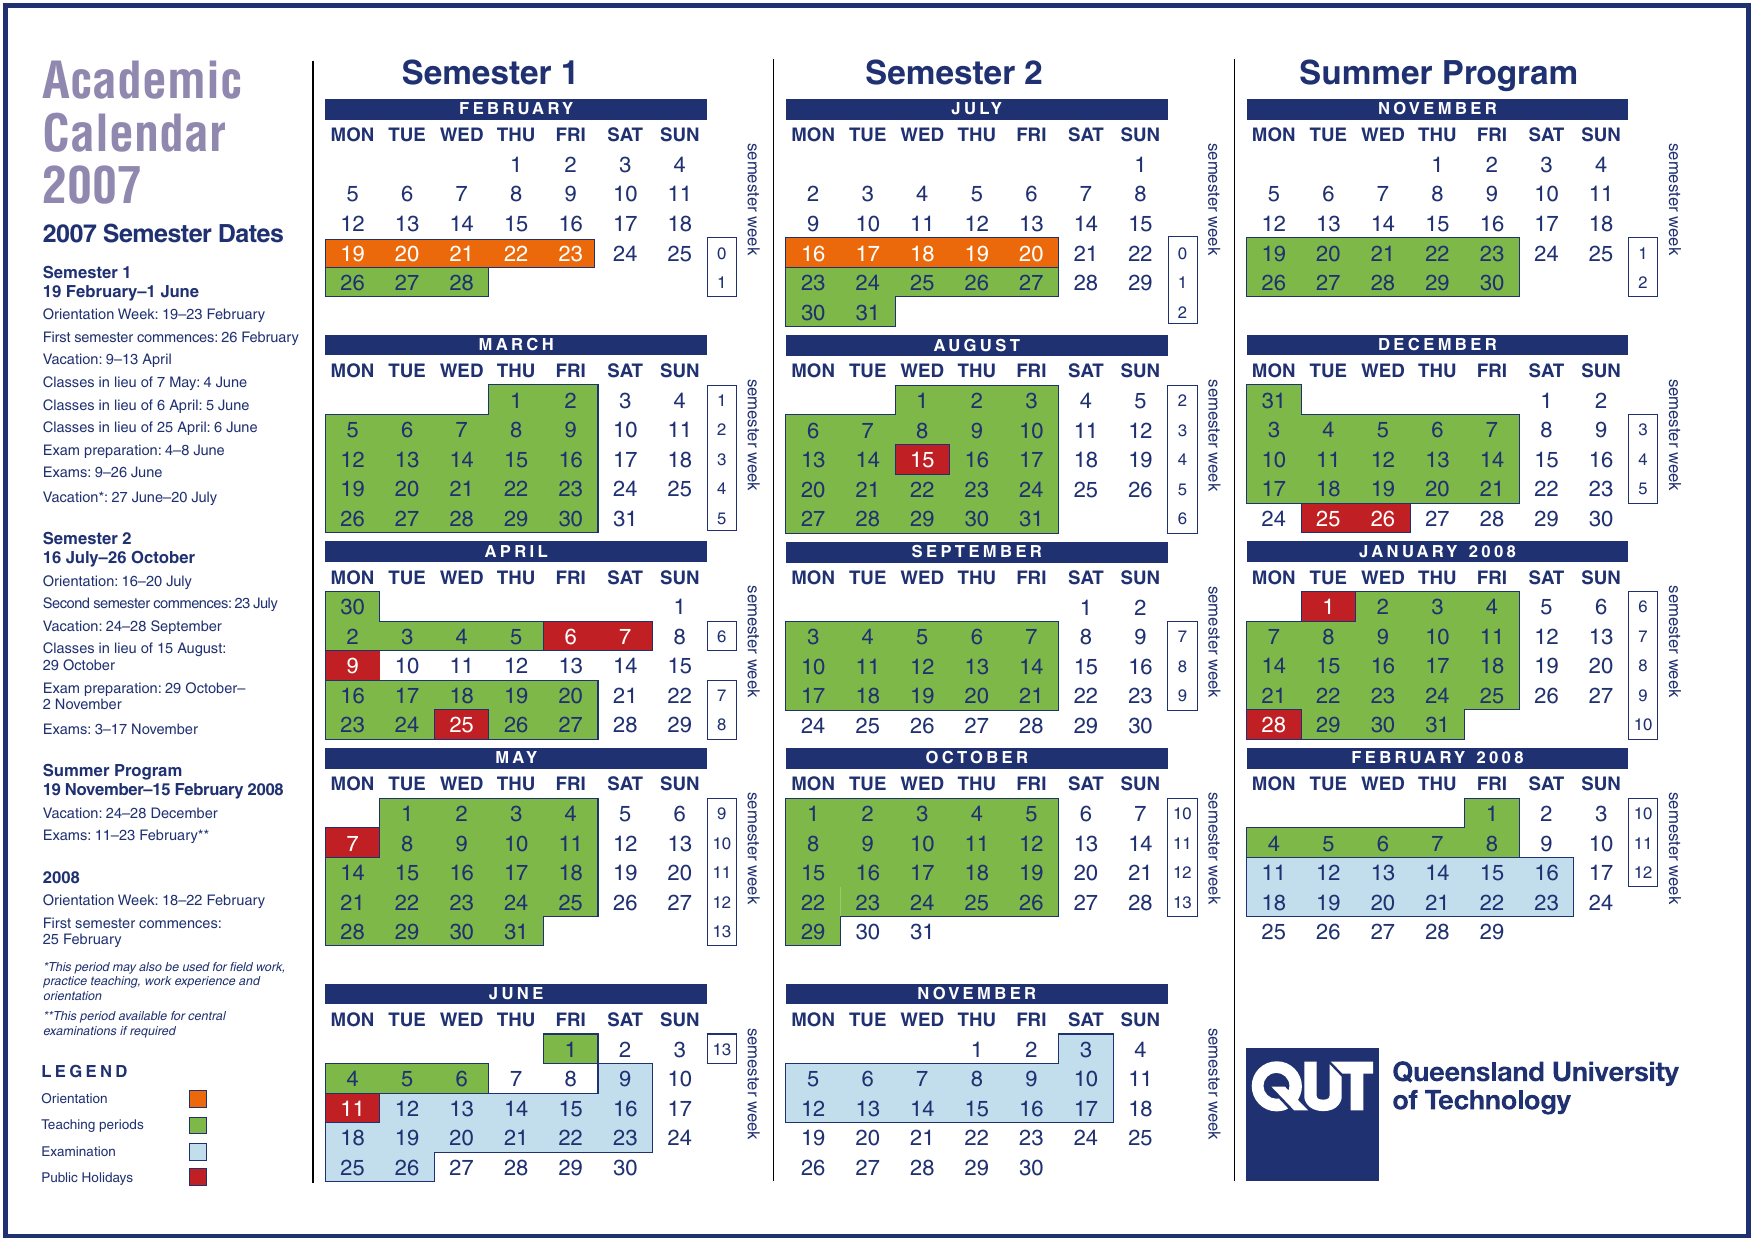 QUT Student Services Academic Calendar 2007